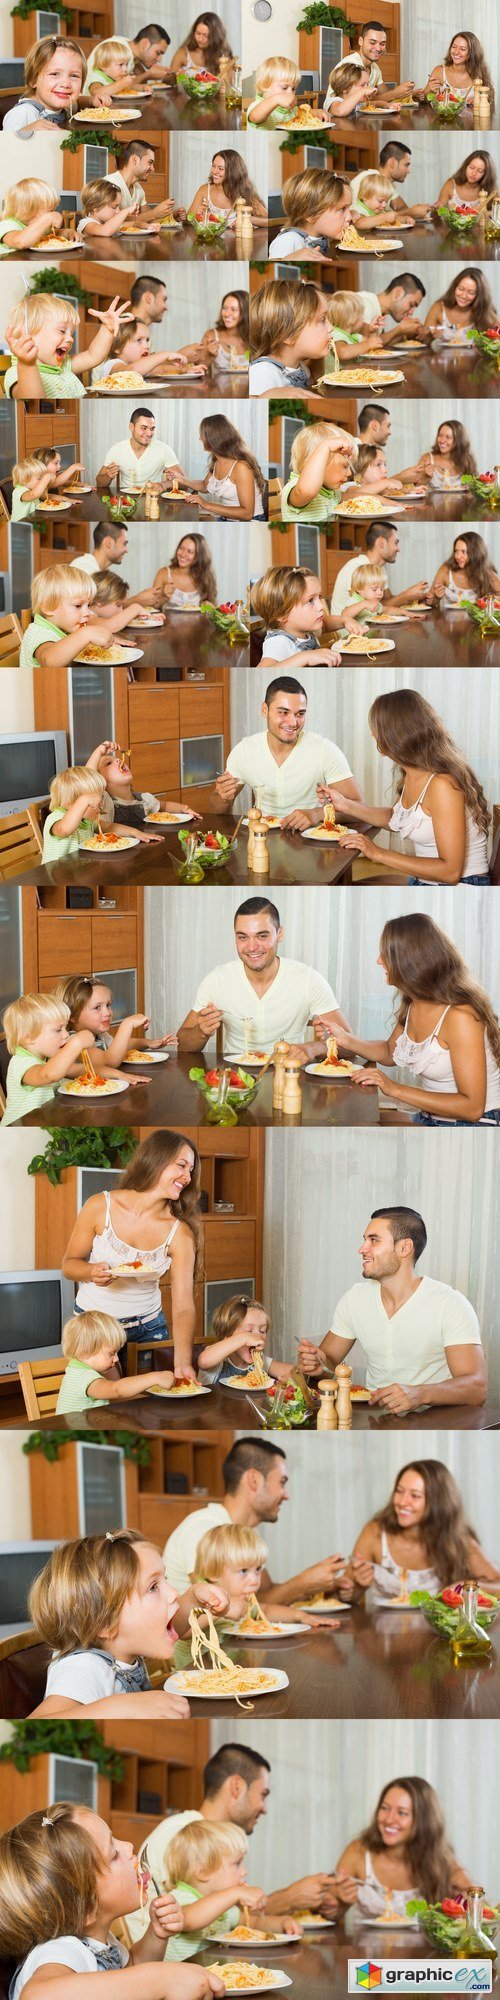 Family eating spaghetti